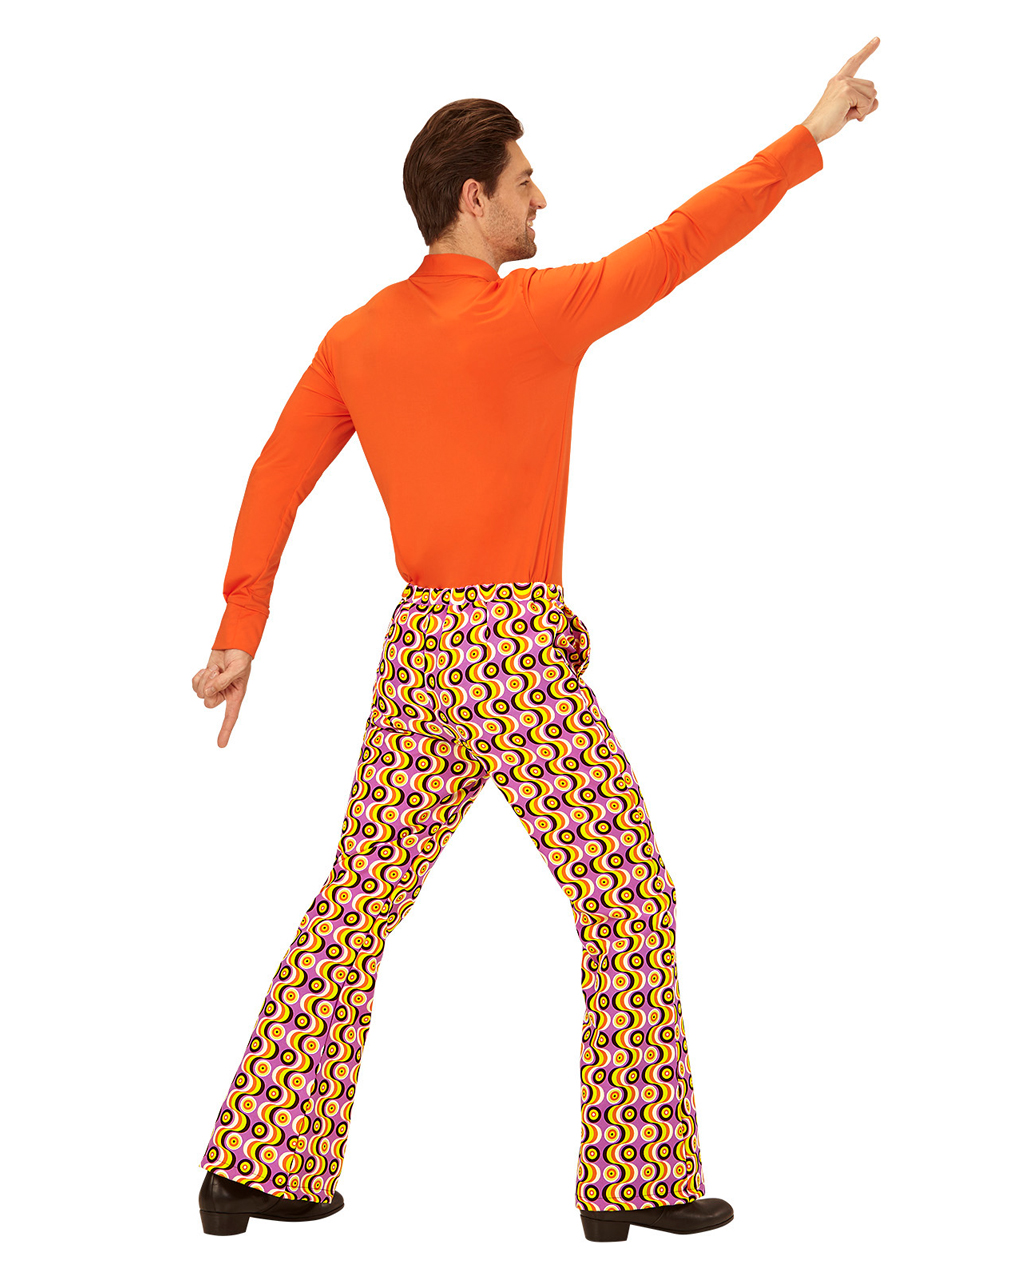 Groovy 70s Men's Flared Pants Discs to buy! | - Karneval Universe